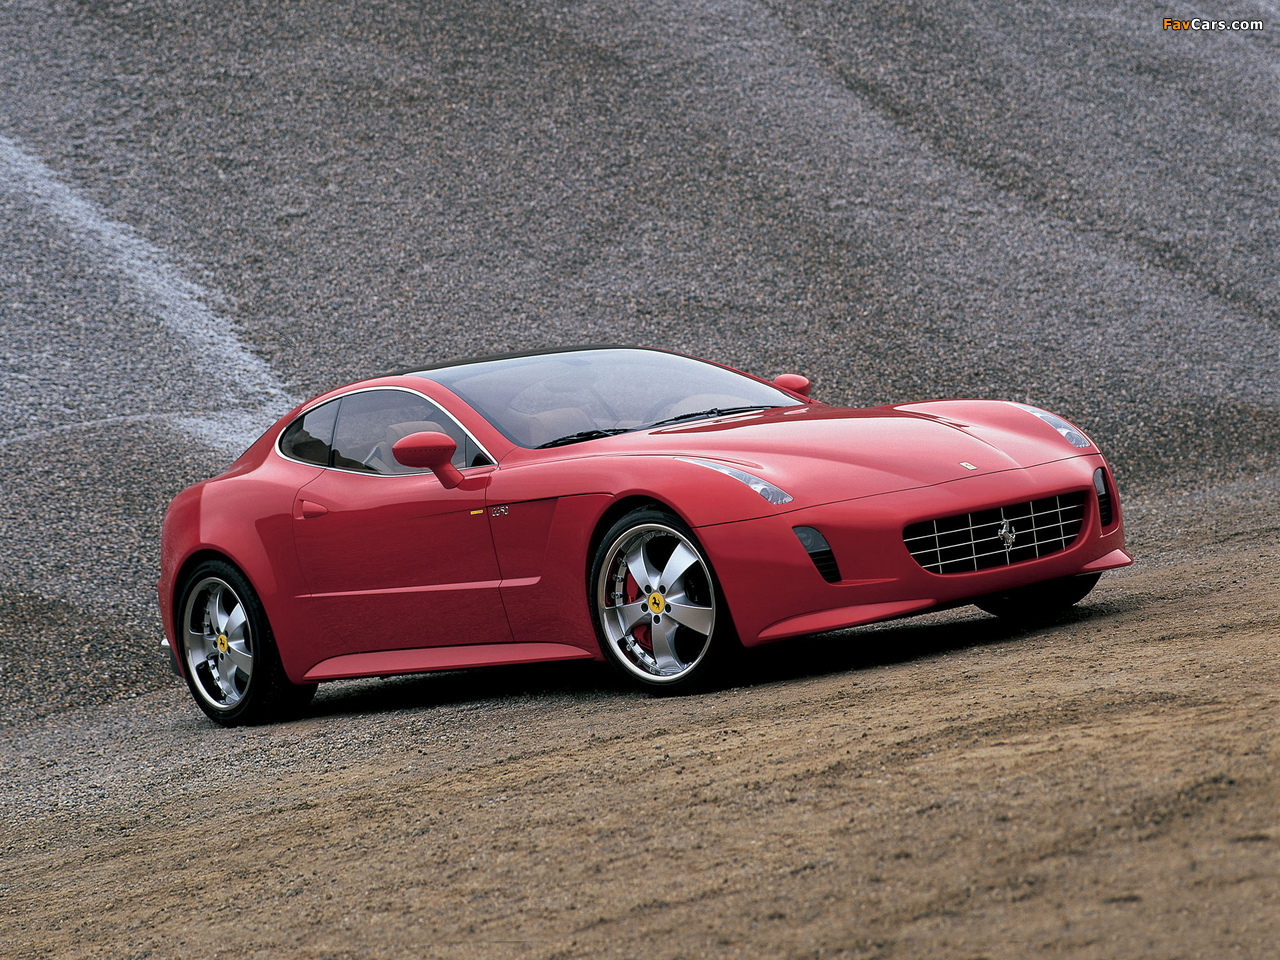 Images of Ferrari GG50 Concept by Giugiaro 2005 (1280 x 960)